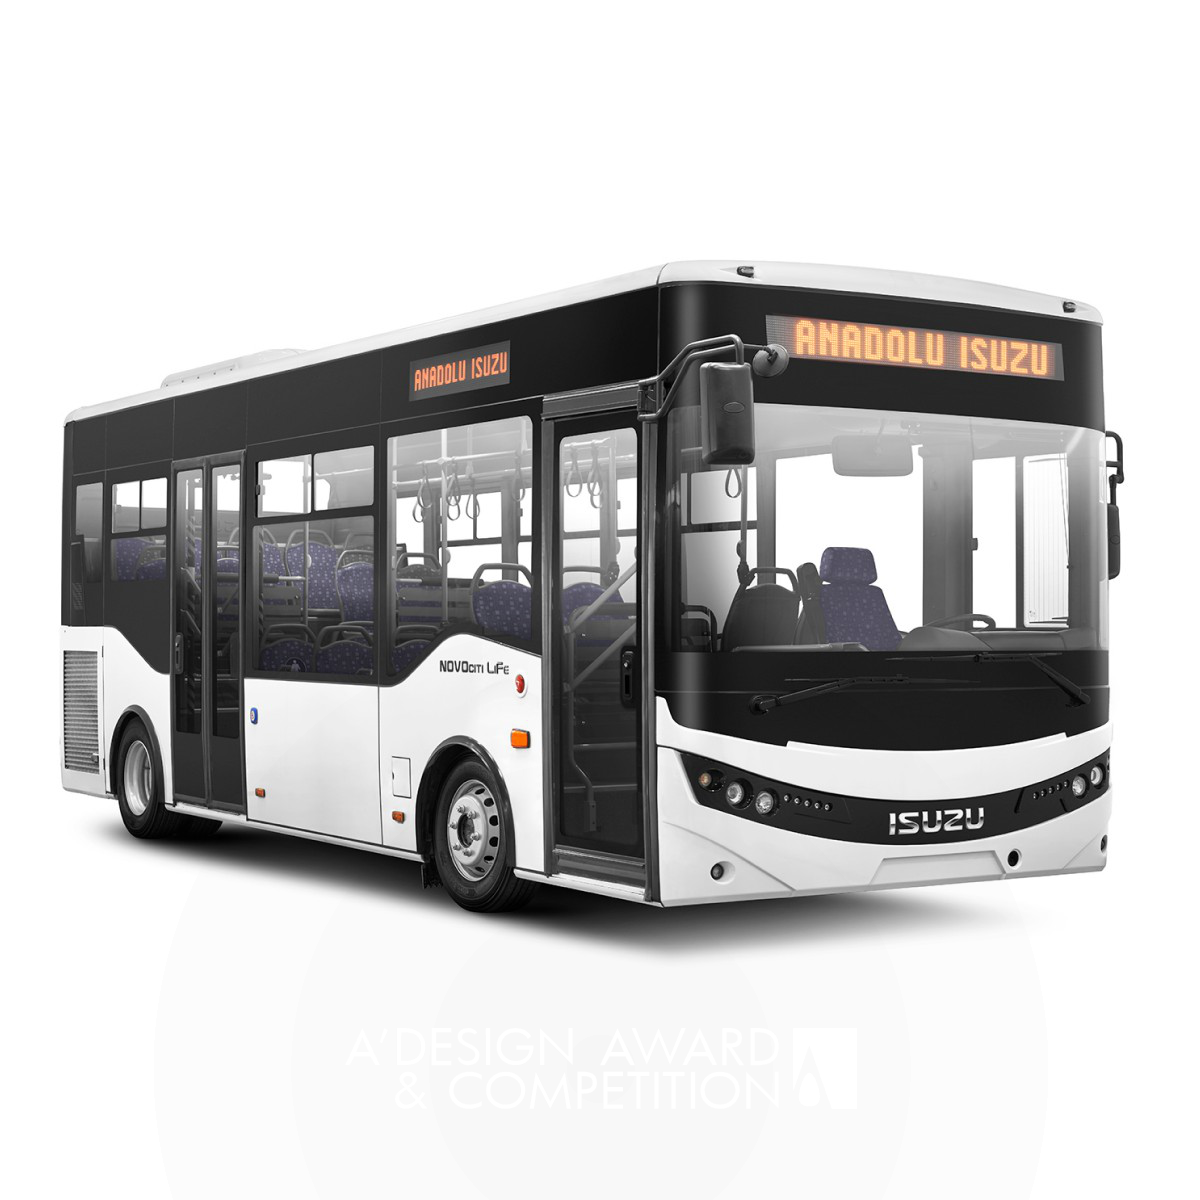 Novociti Life Public Transportation Vehicle by Anadolu Isuzu Design Team